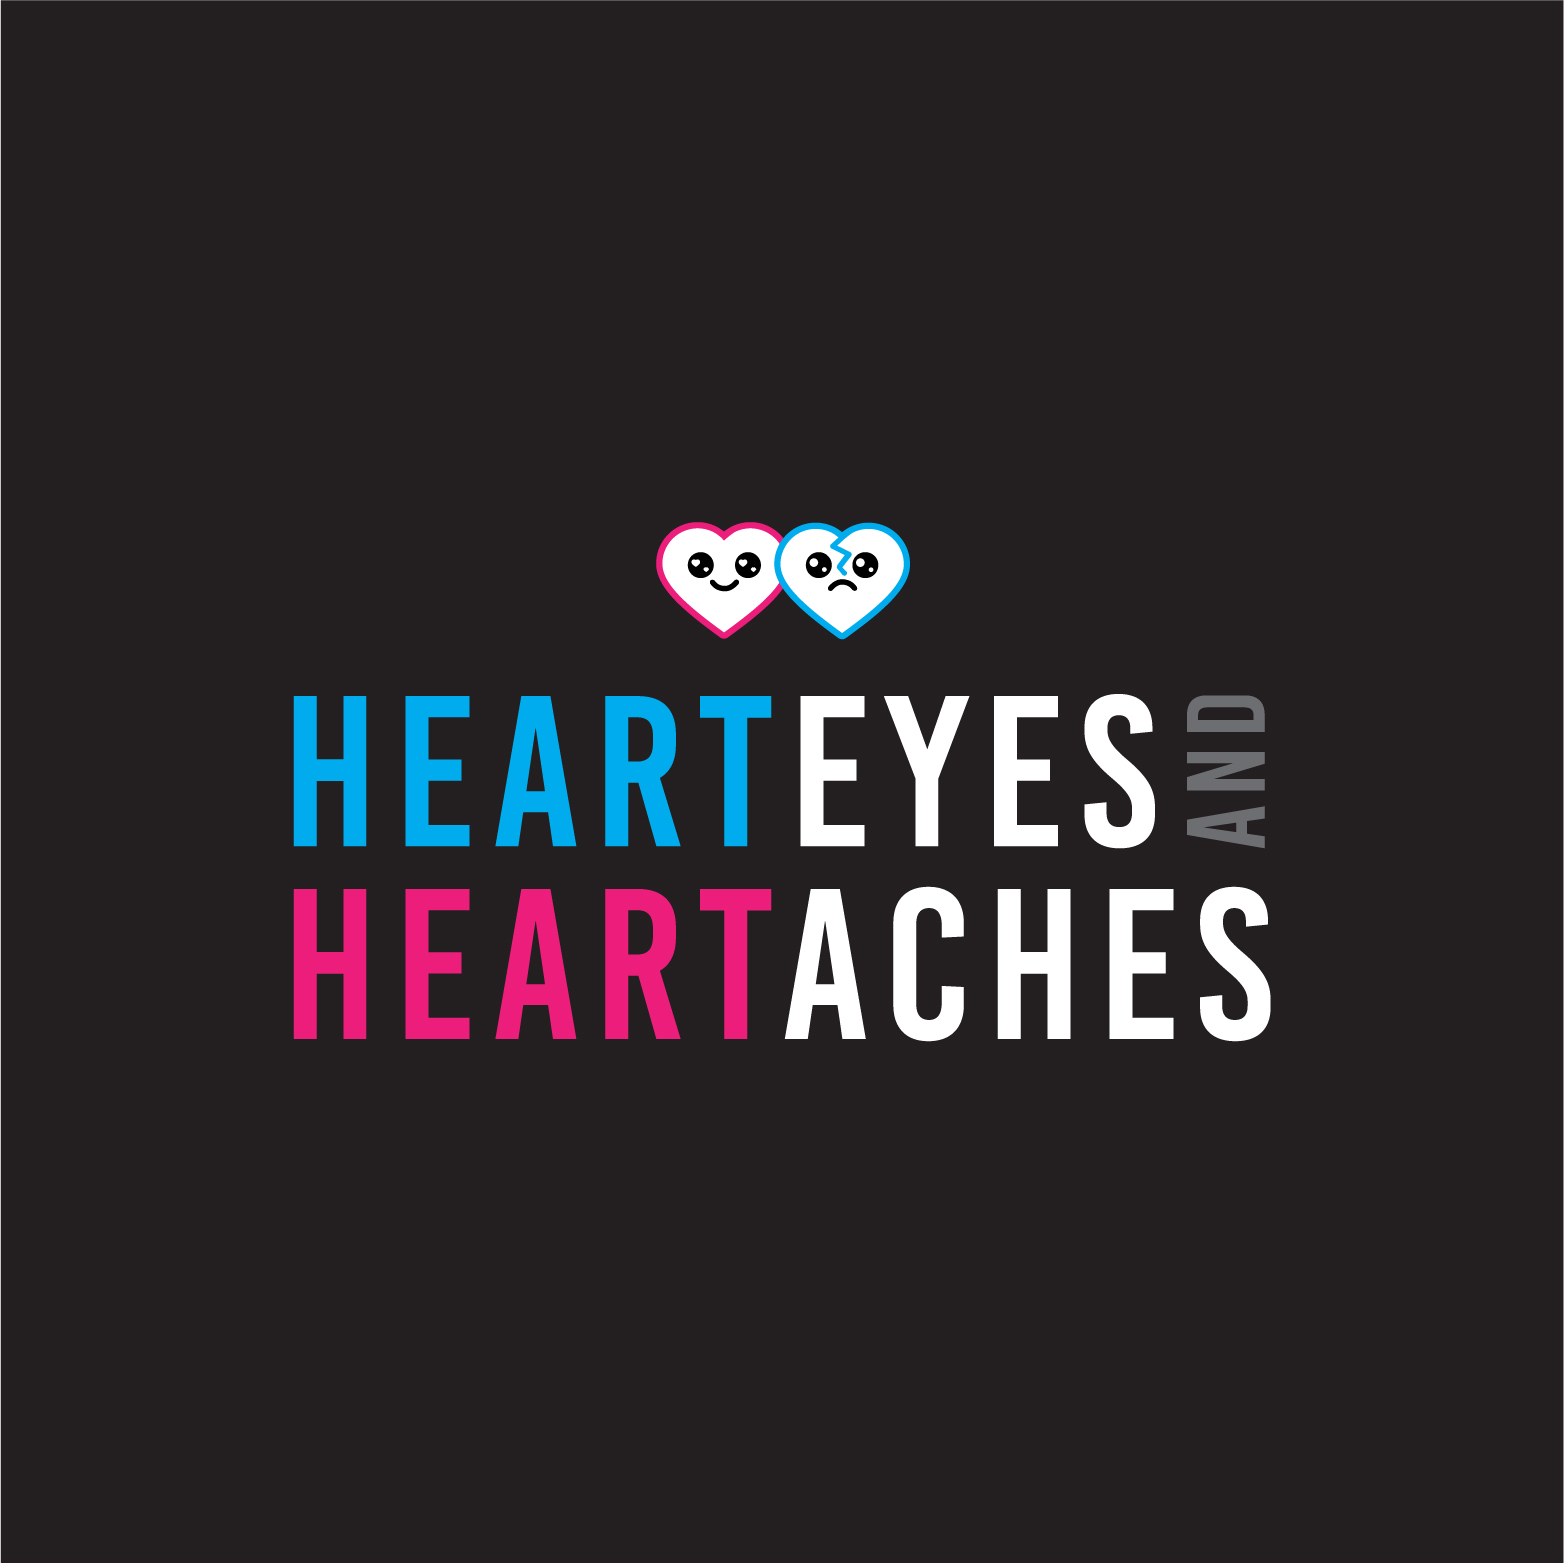 Heart Eyes and Heart Aches logo